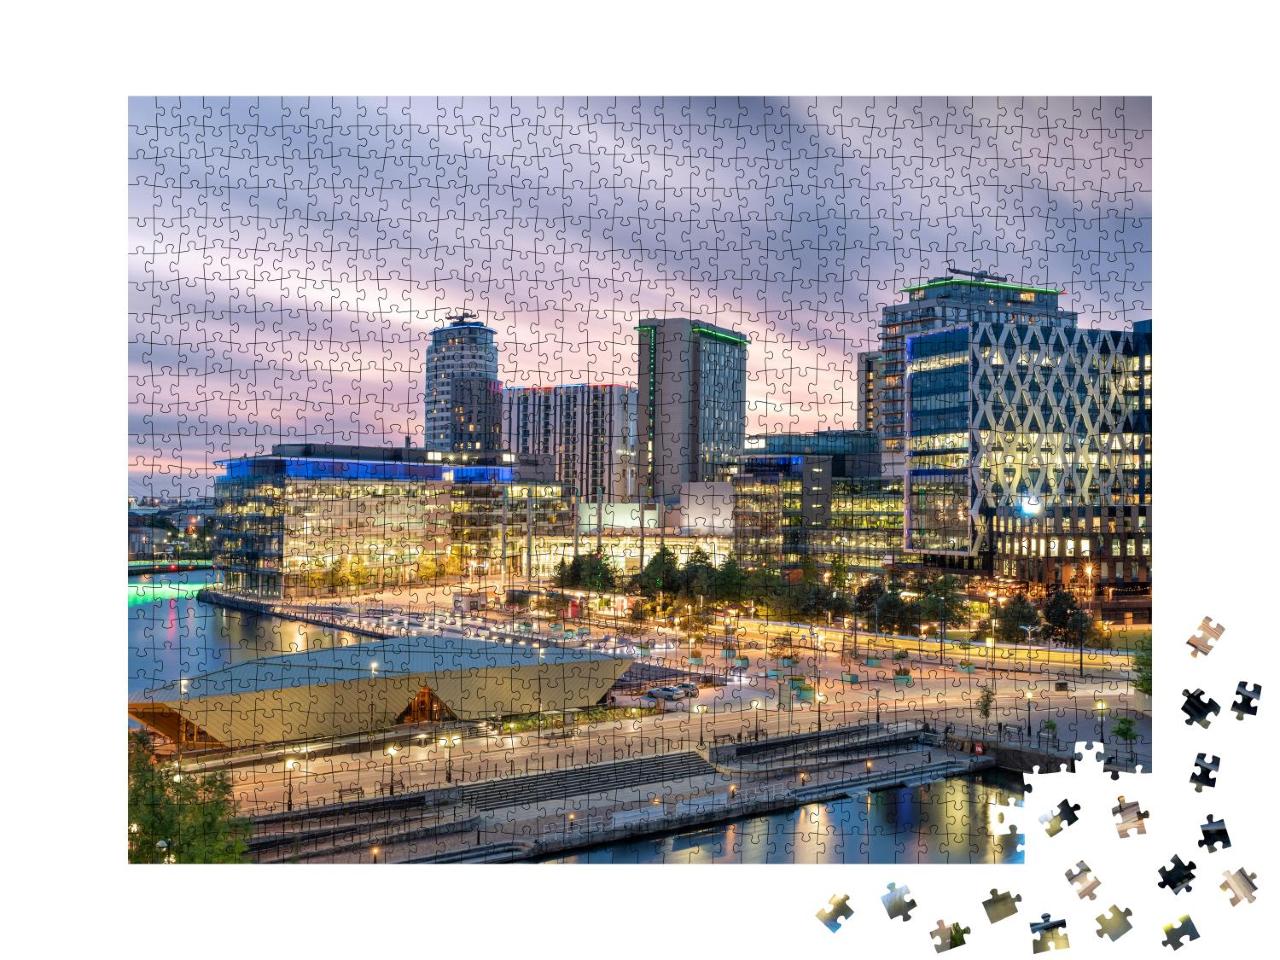 Puzzle 1000 Teile „Morgenstimmung: Media City, Salford Quays, Manchester“